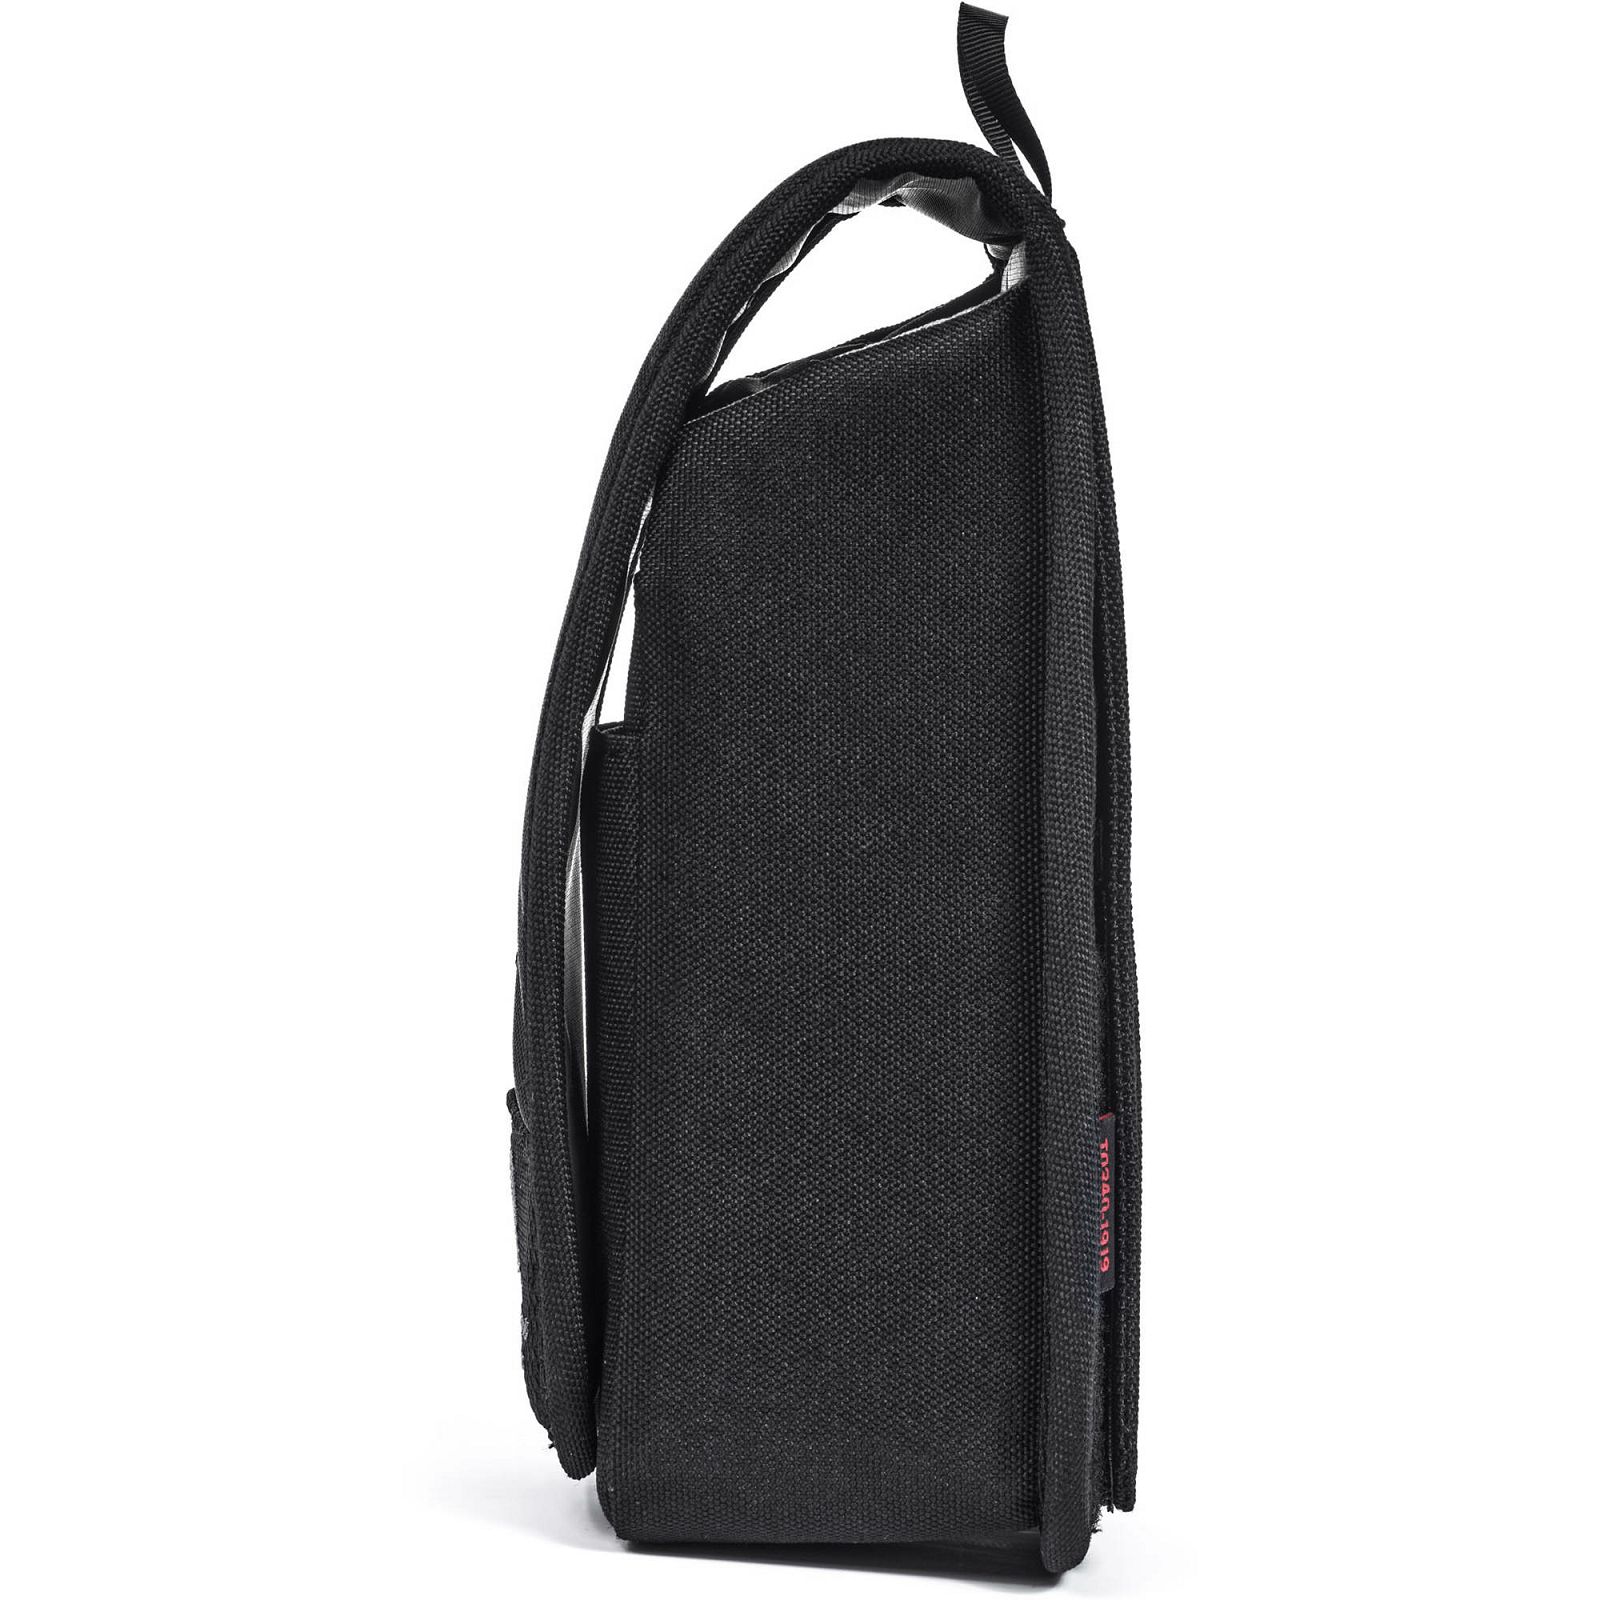 Tamrac Arc Flash Pocket 1.0 Black torbica za bljeskalicu (T0340-1919)